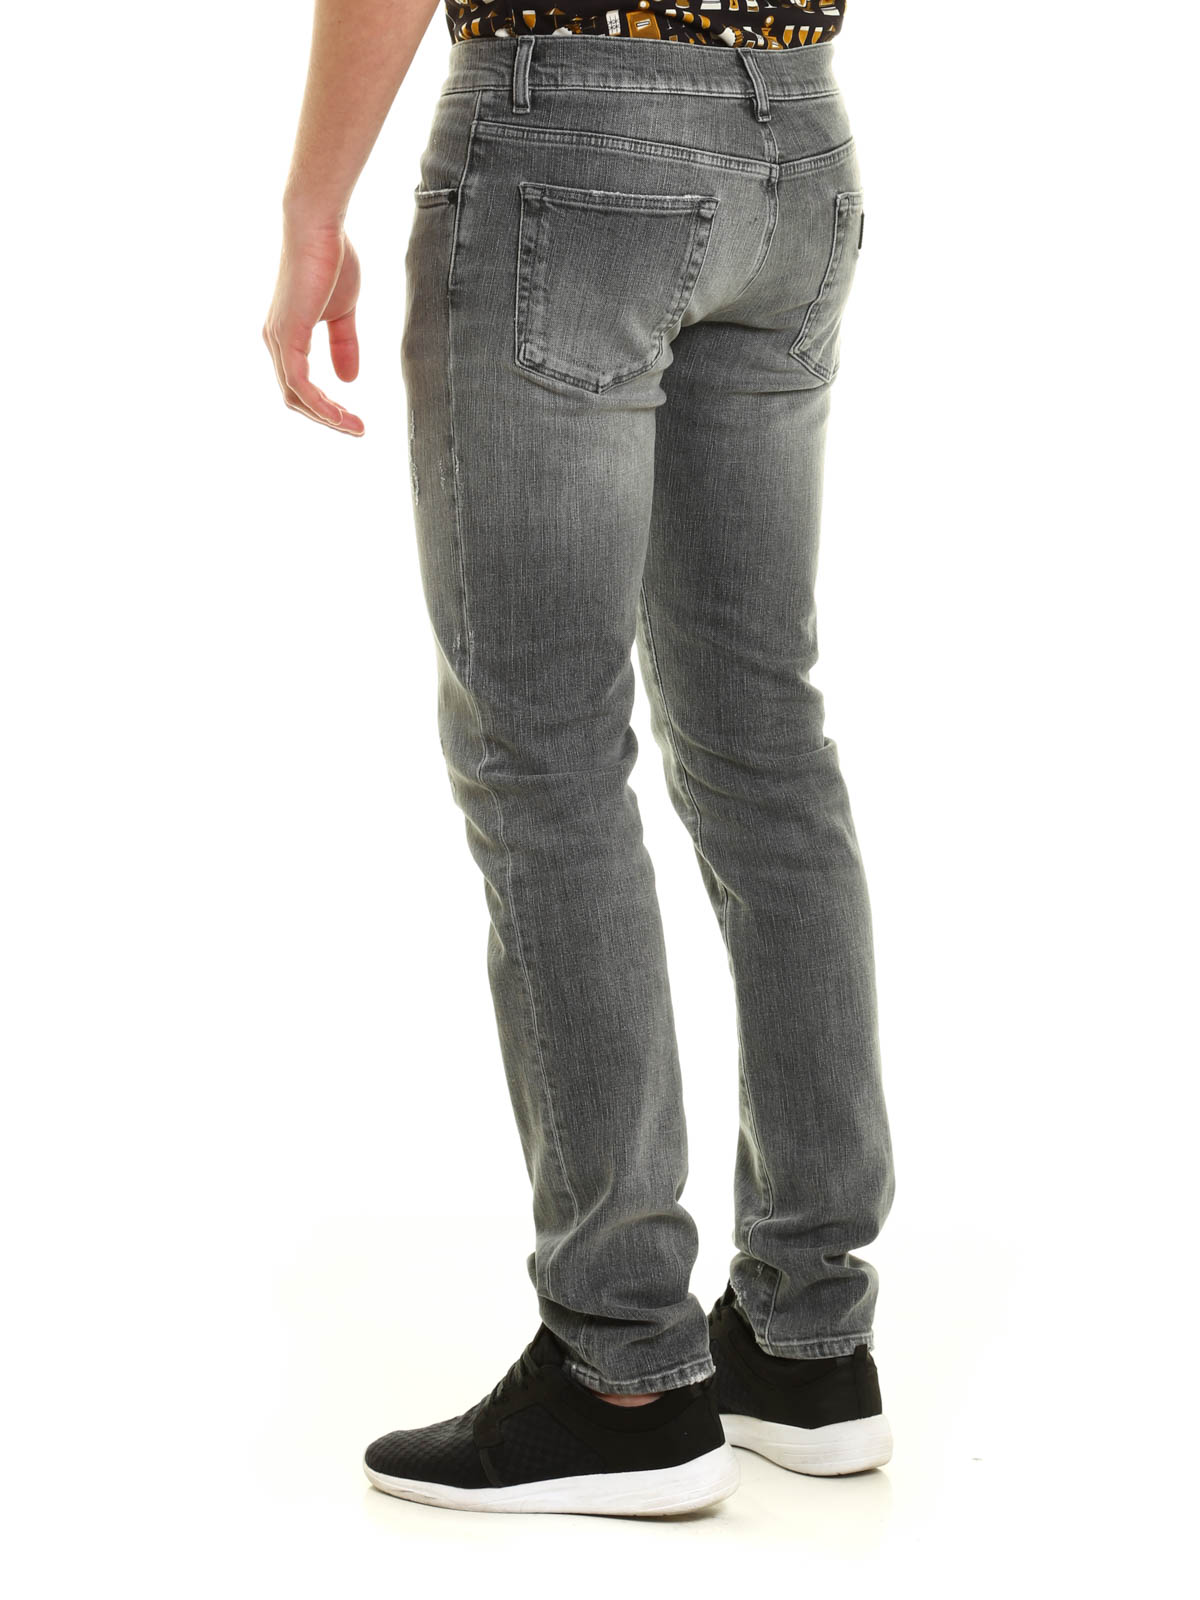 Jeans Rectos Dolce Gabbana - Vaqueros Rectos Grises Para Hombre - G6XOLDG8U55S9001